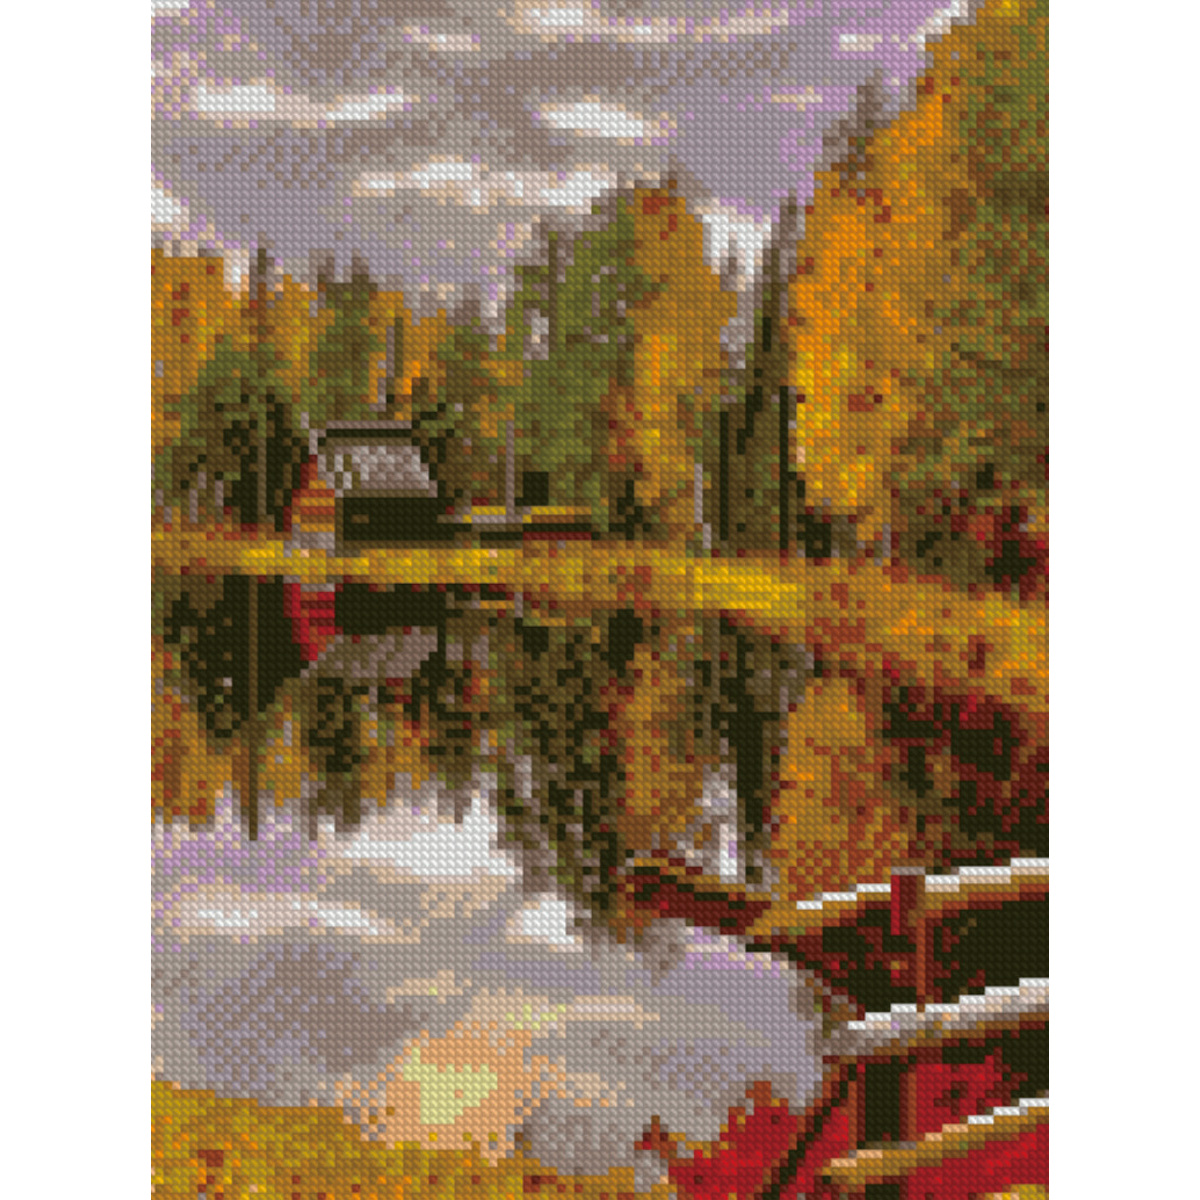 Diamond mosaic Premium HX141 "Autumn Forest", size 30x40 cm